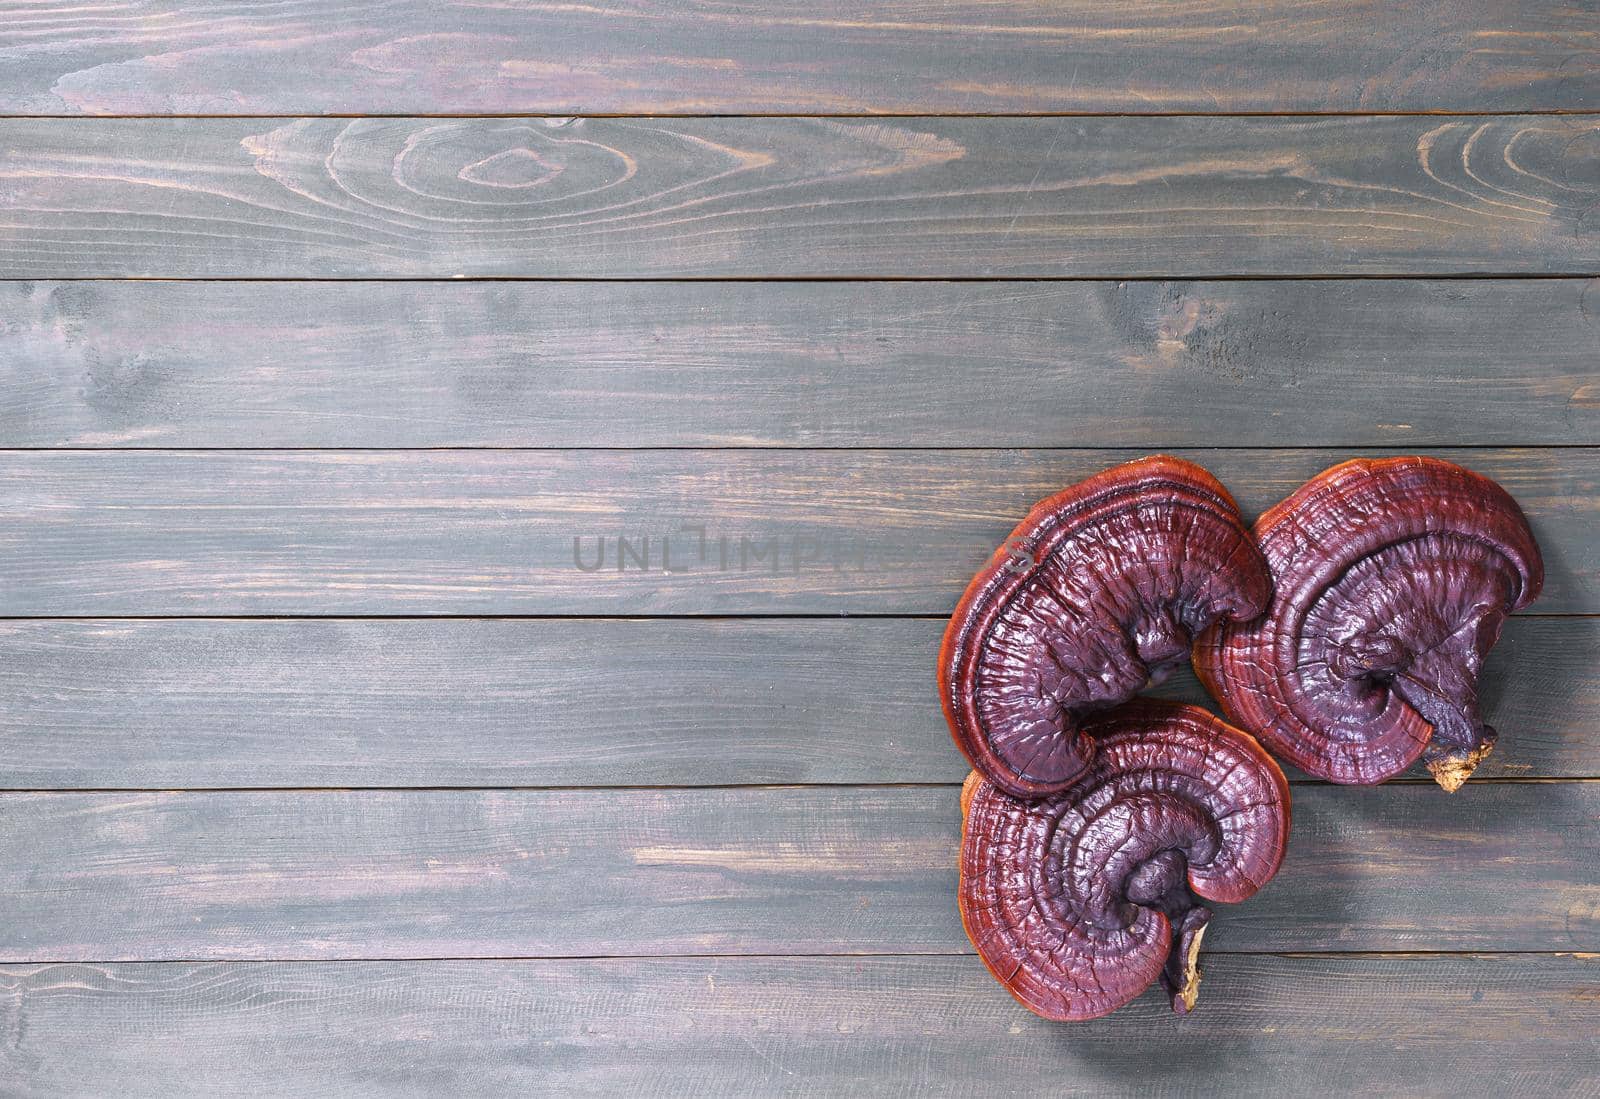 Ganoderma lucidum mushroom on wooden floor by stoonn